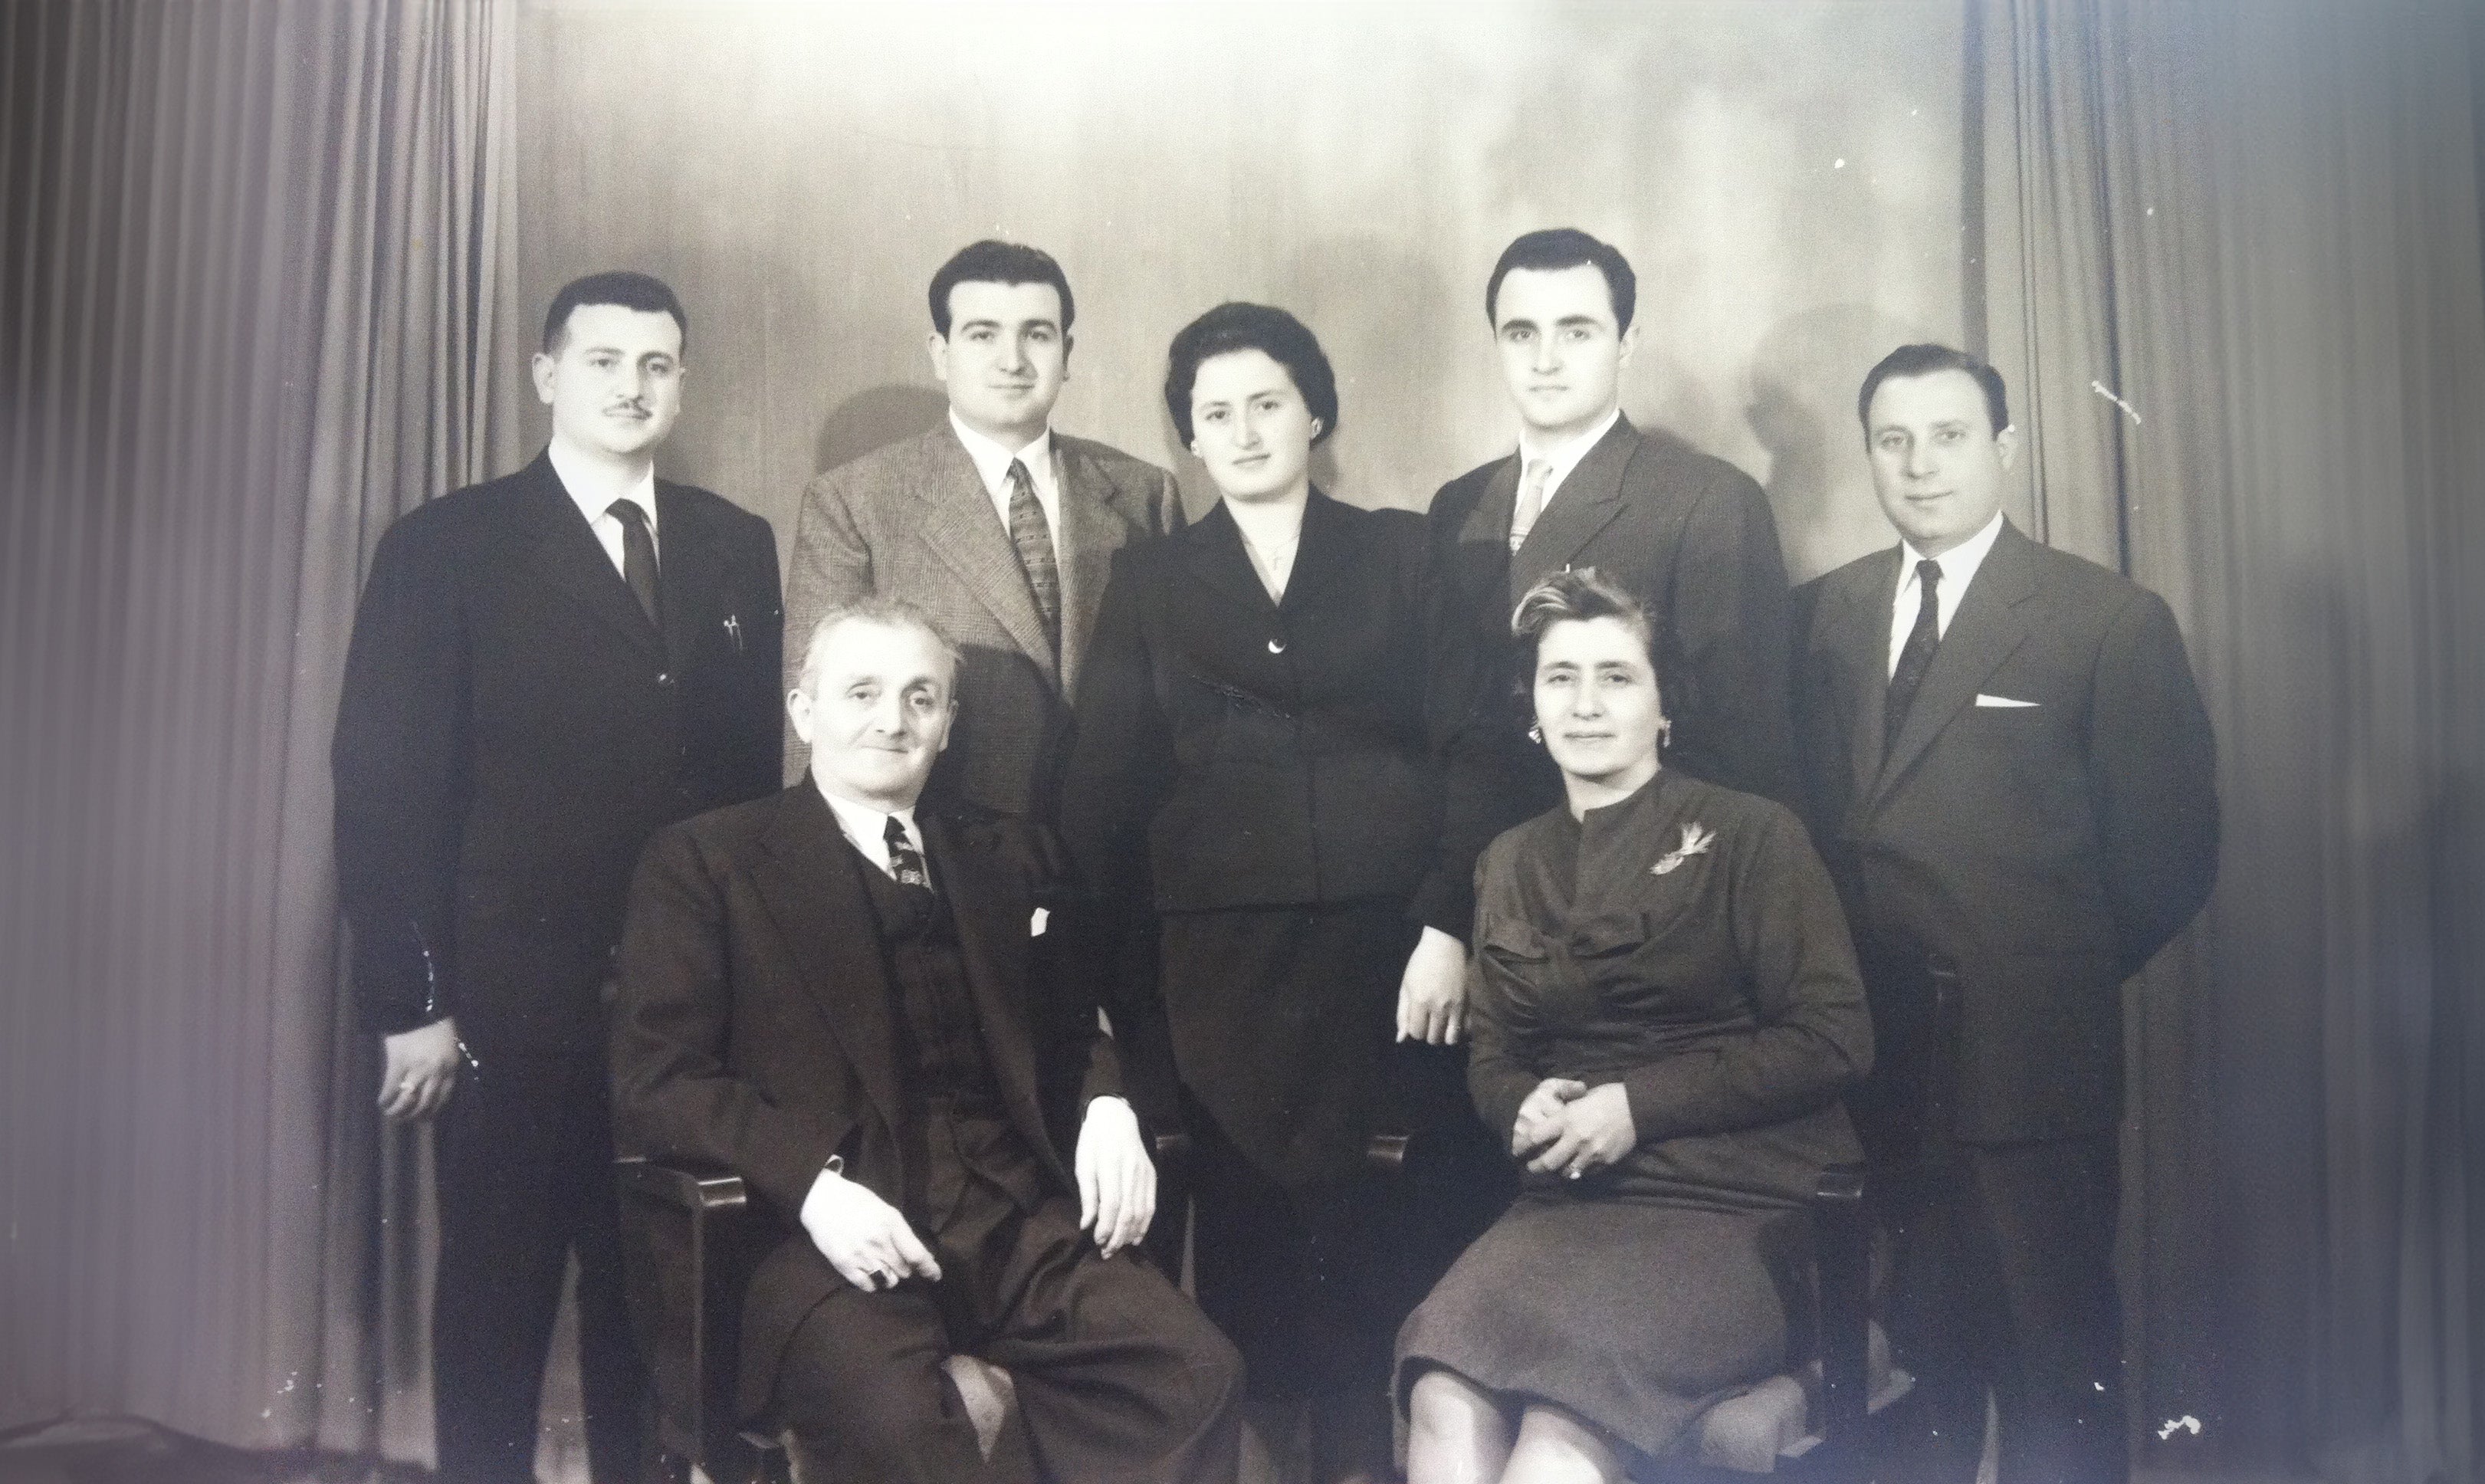 Kalajian Family portrait